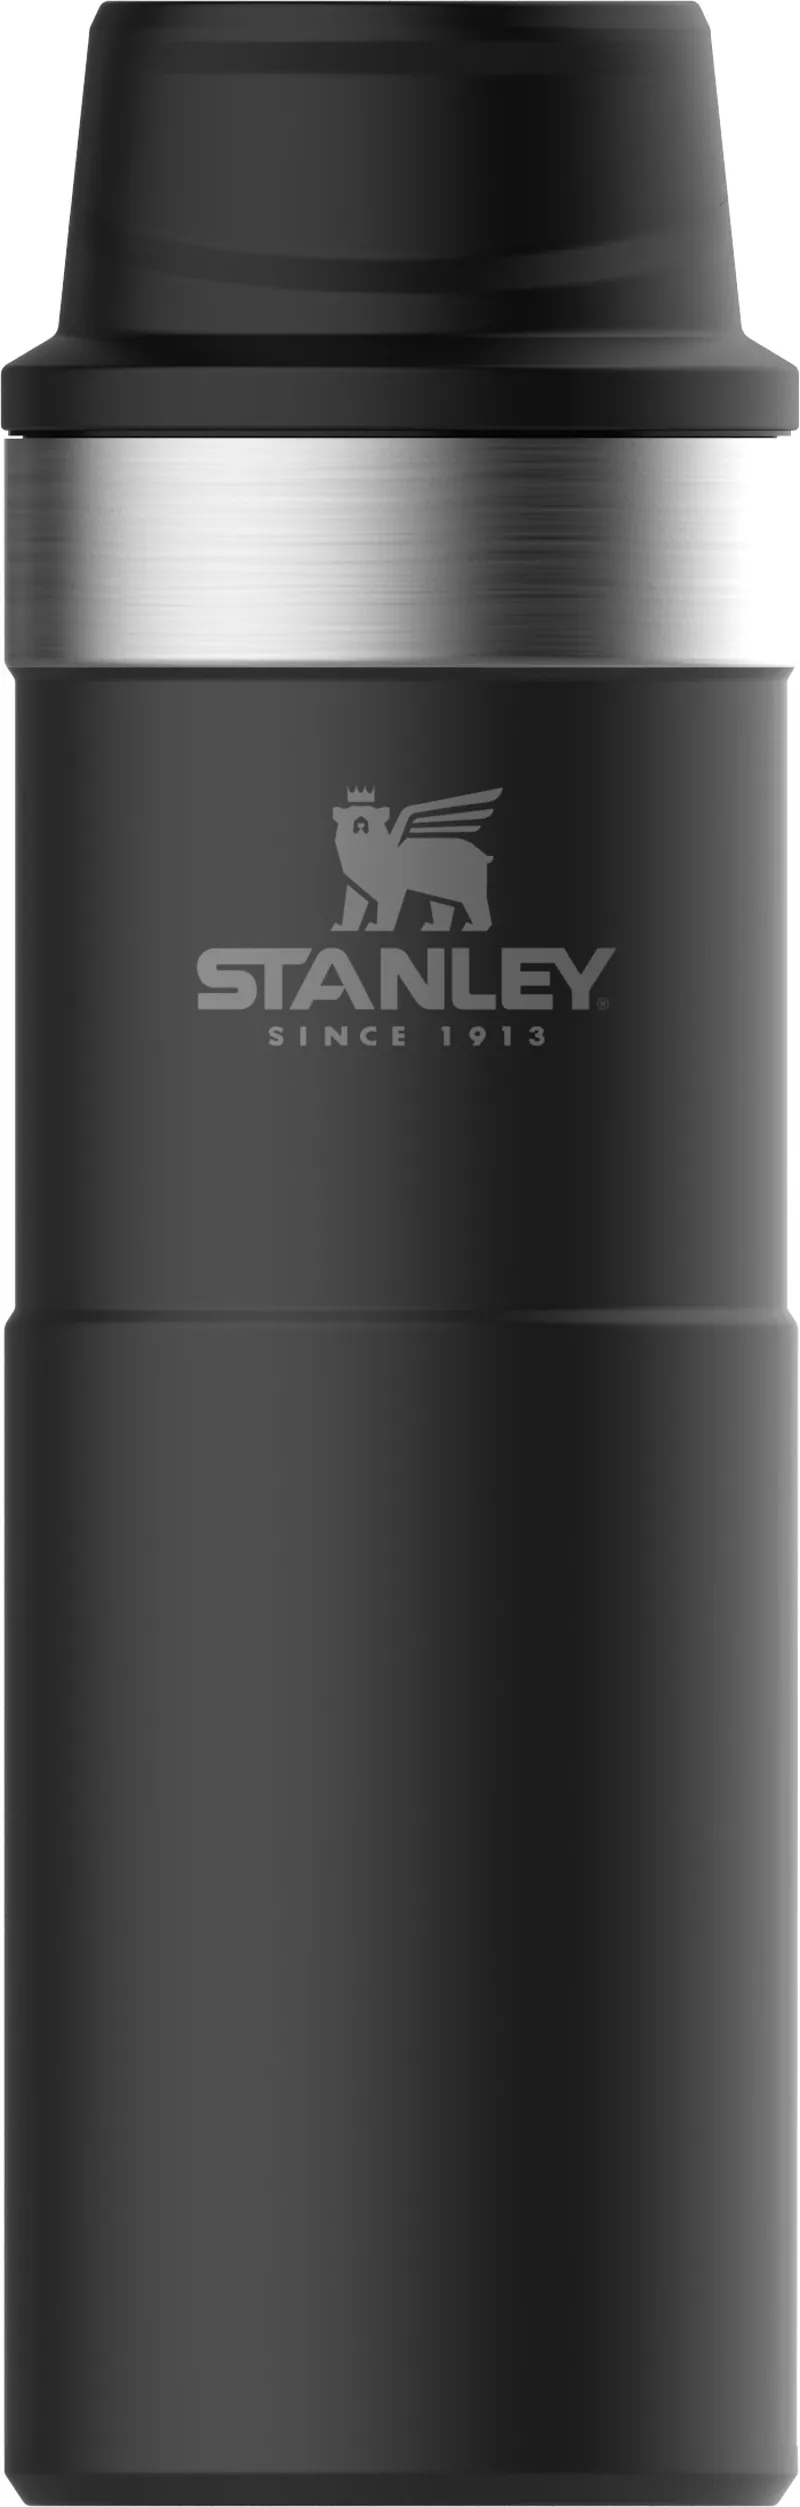 16oz Stanley Classic Trigger Action Travel Mug Bottle NEW 0.47L STANLEY NEW